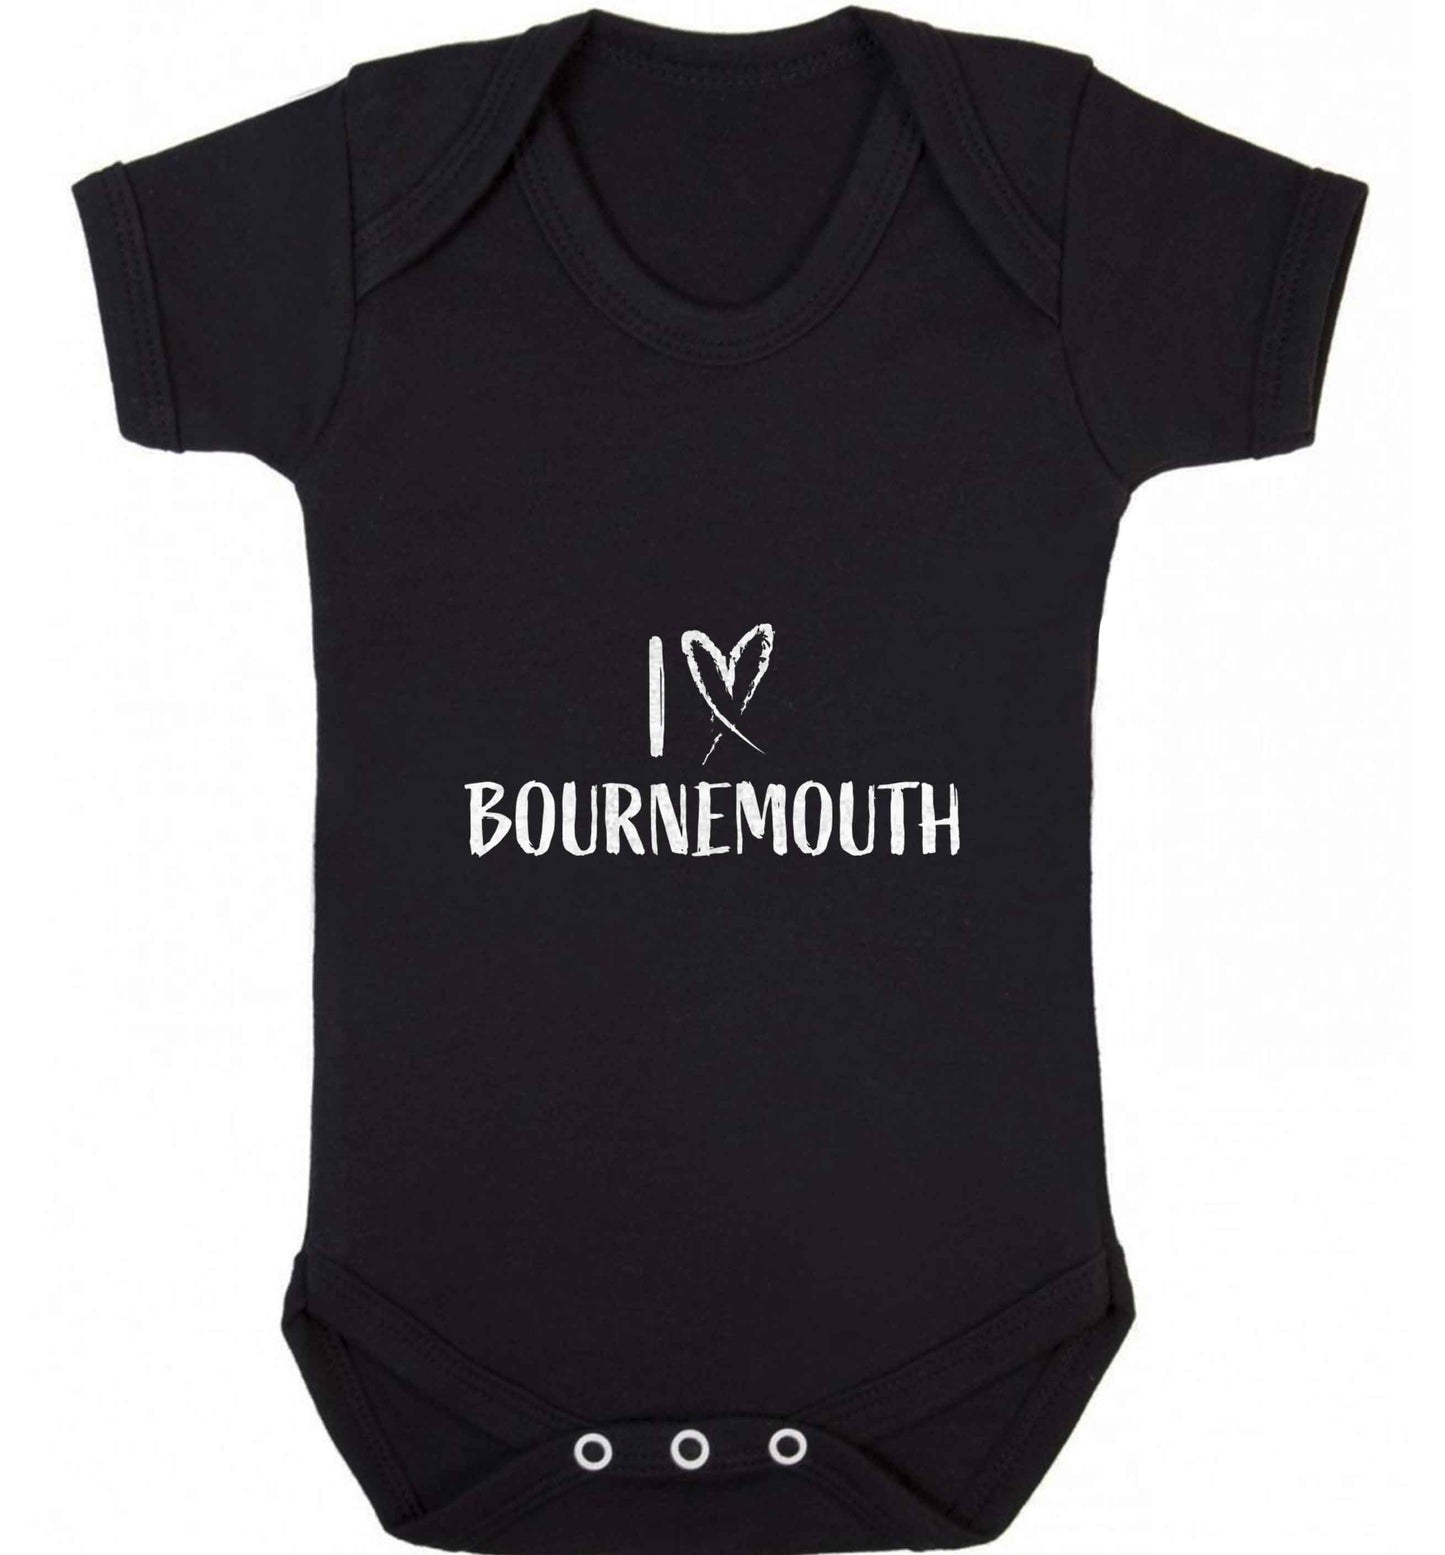 I love Bournemouth baby vest black 18-24 months